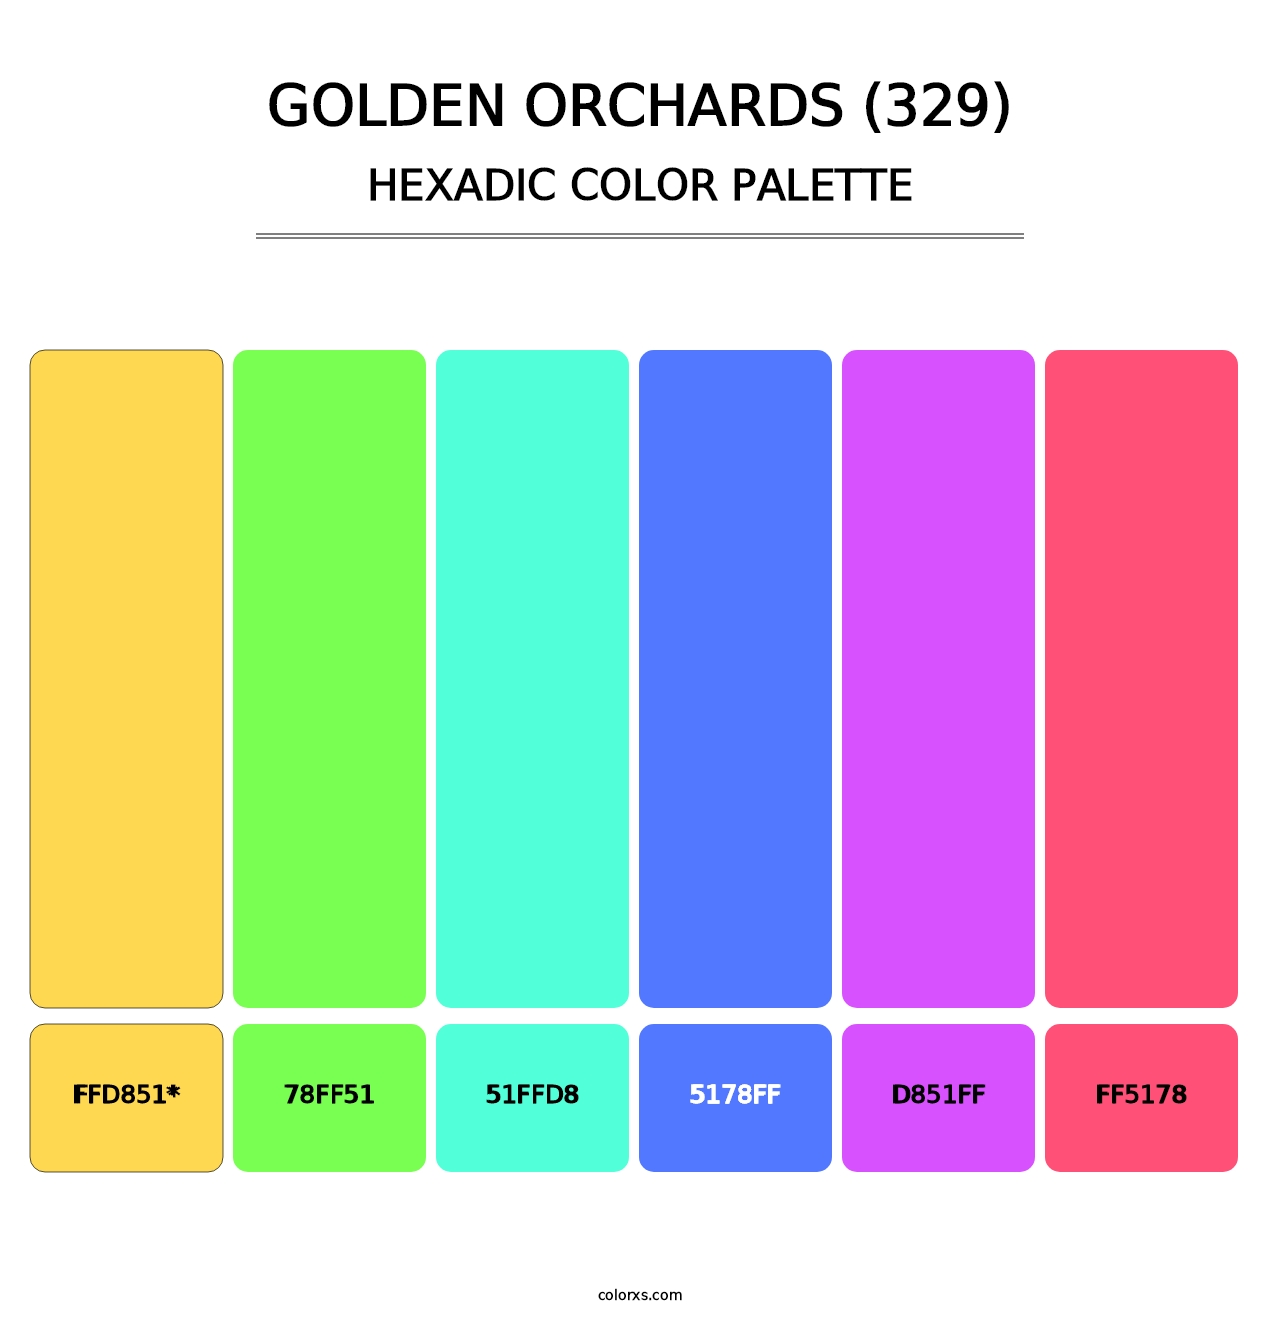 Golden Orchards (329) - Hexadic Color Palette